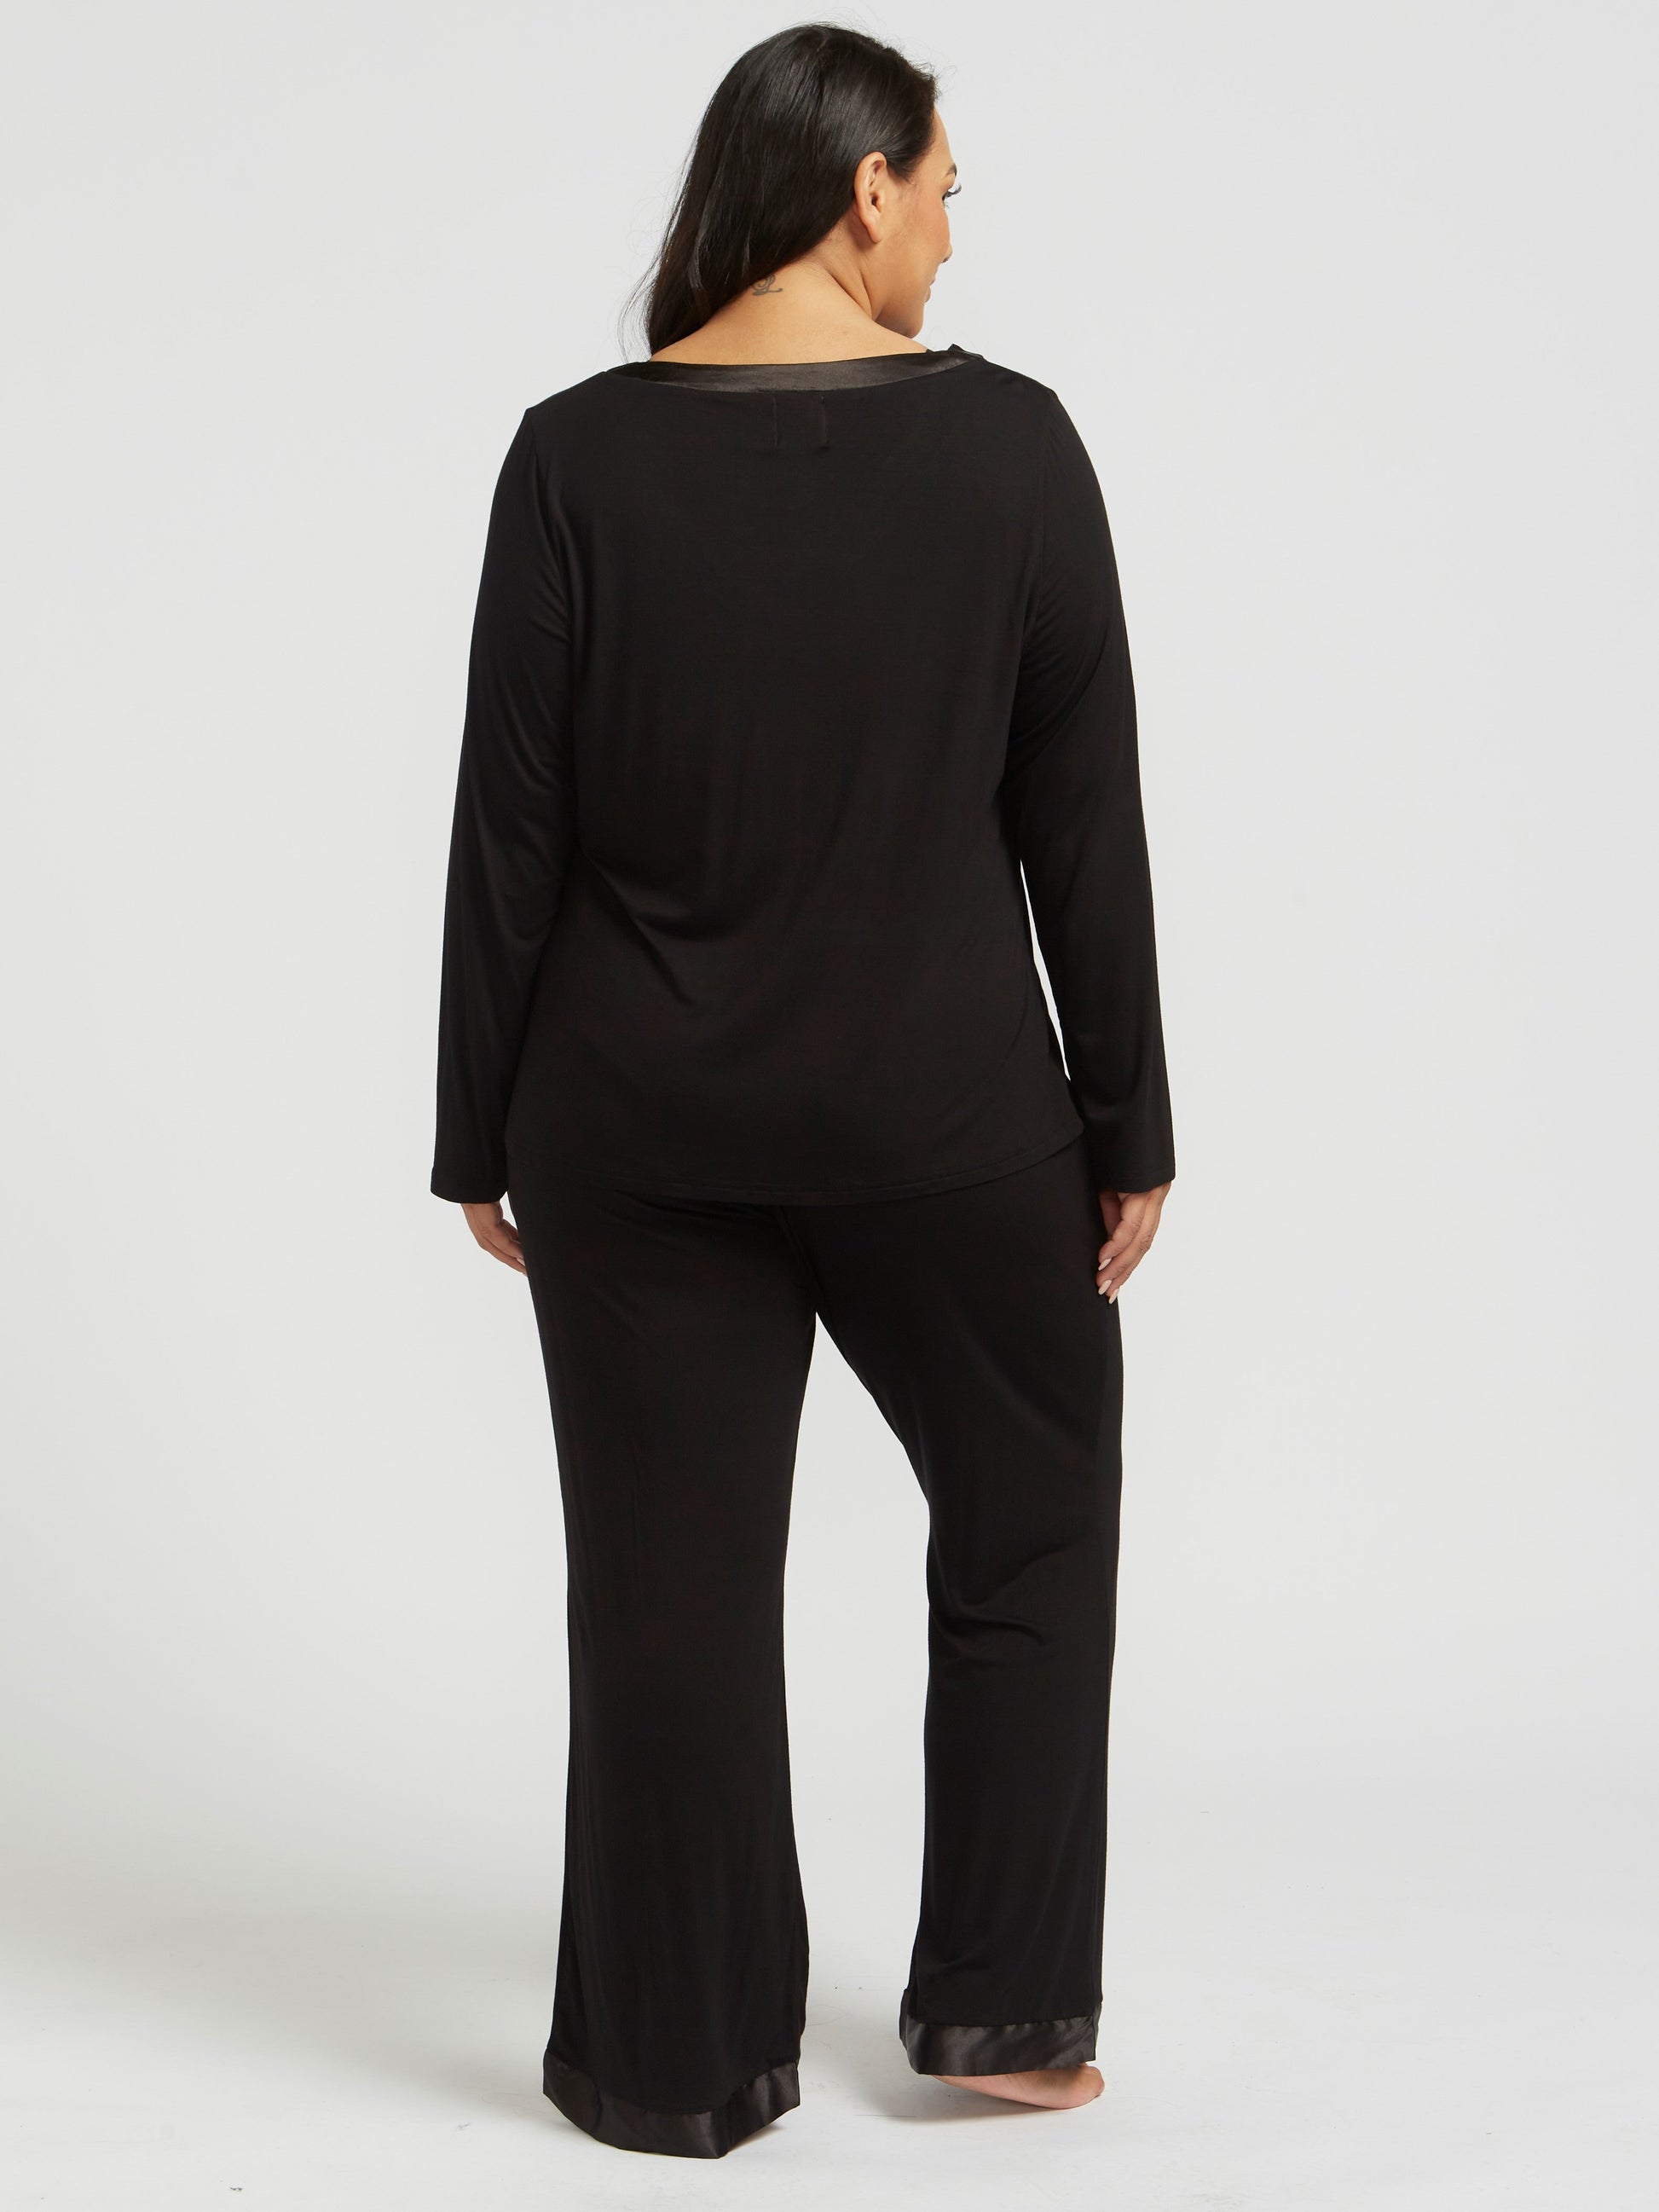 Berkanan “Pyjama Party” Women's Jersey PJ Set - Black